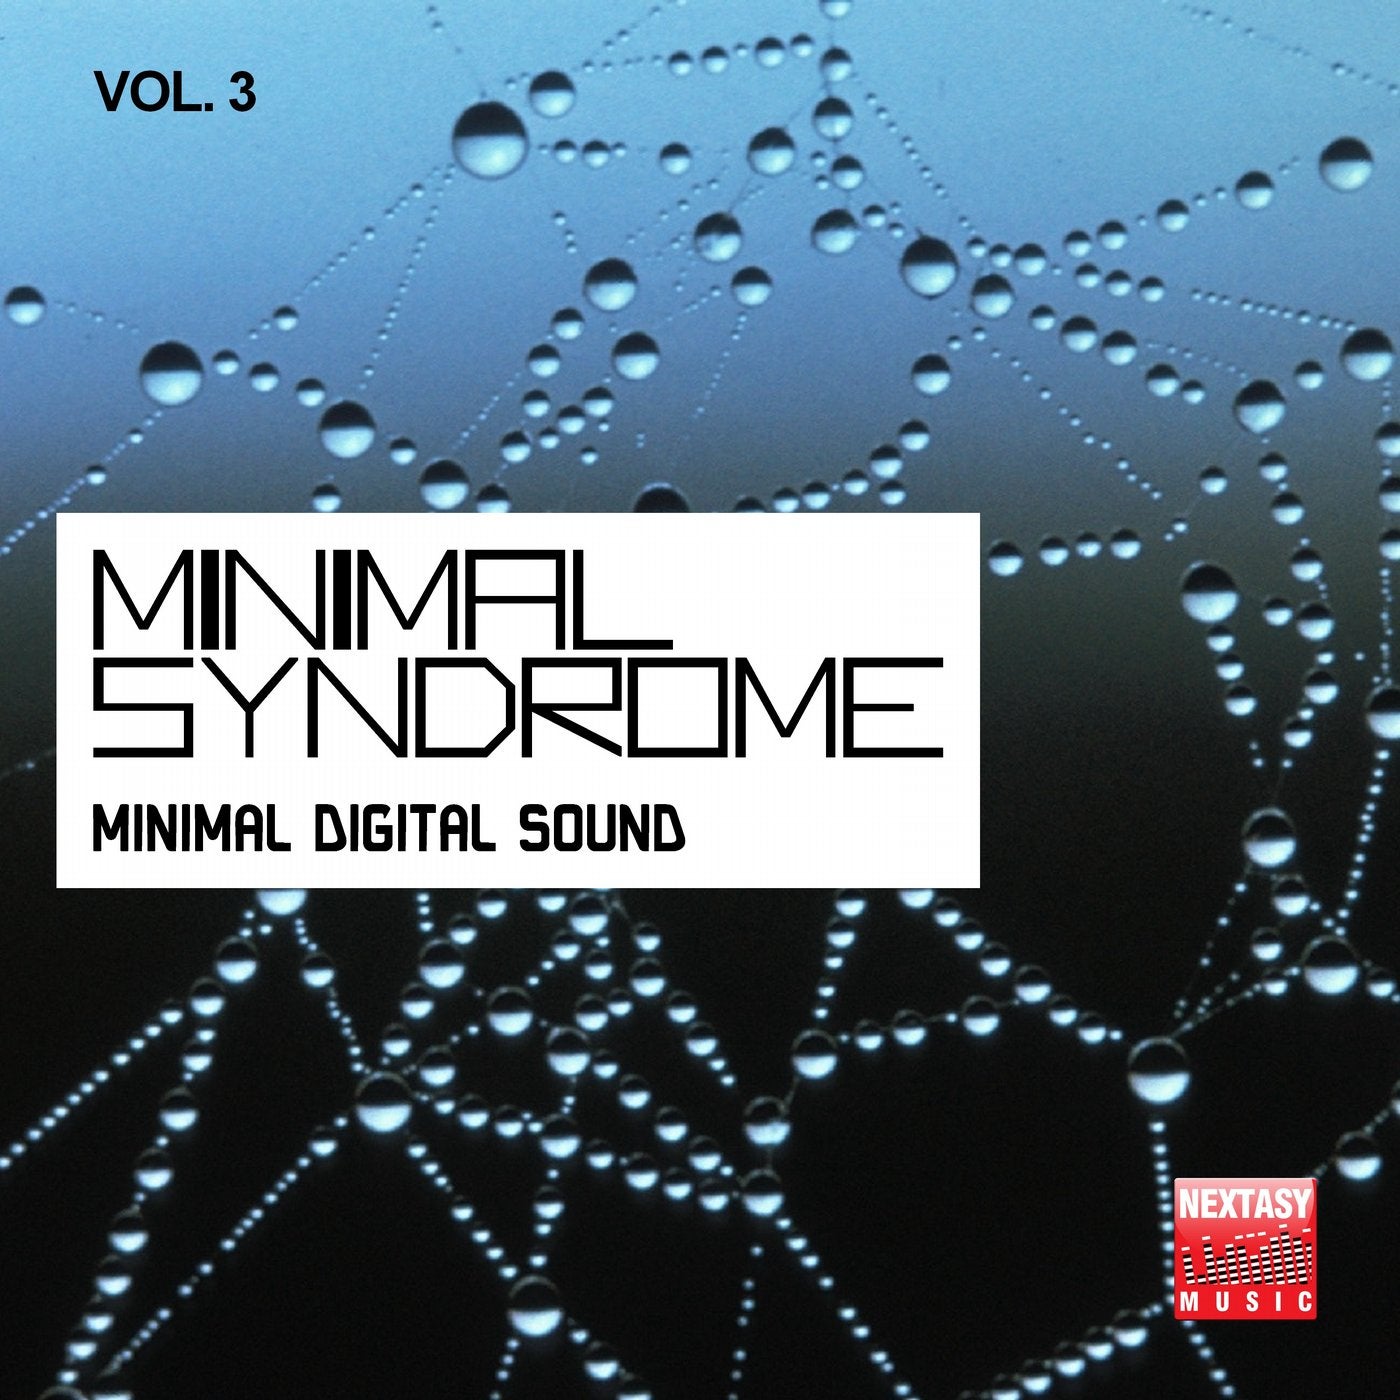 Minimal Syndrome, Vol. 3 (Minimal Digital Sound)